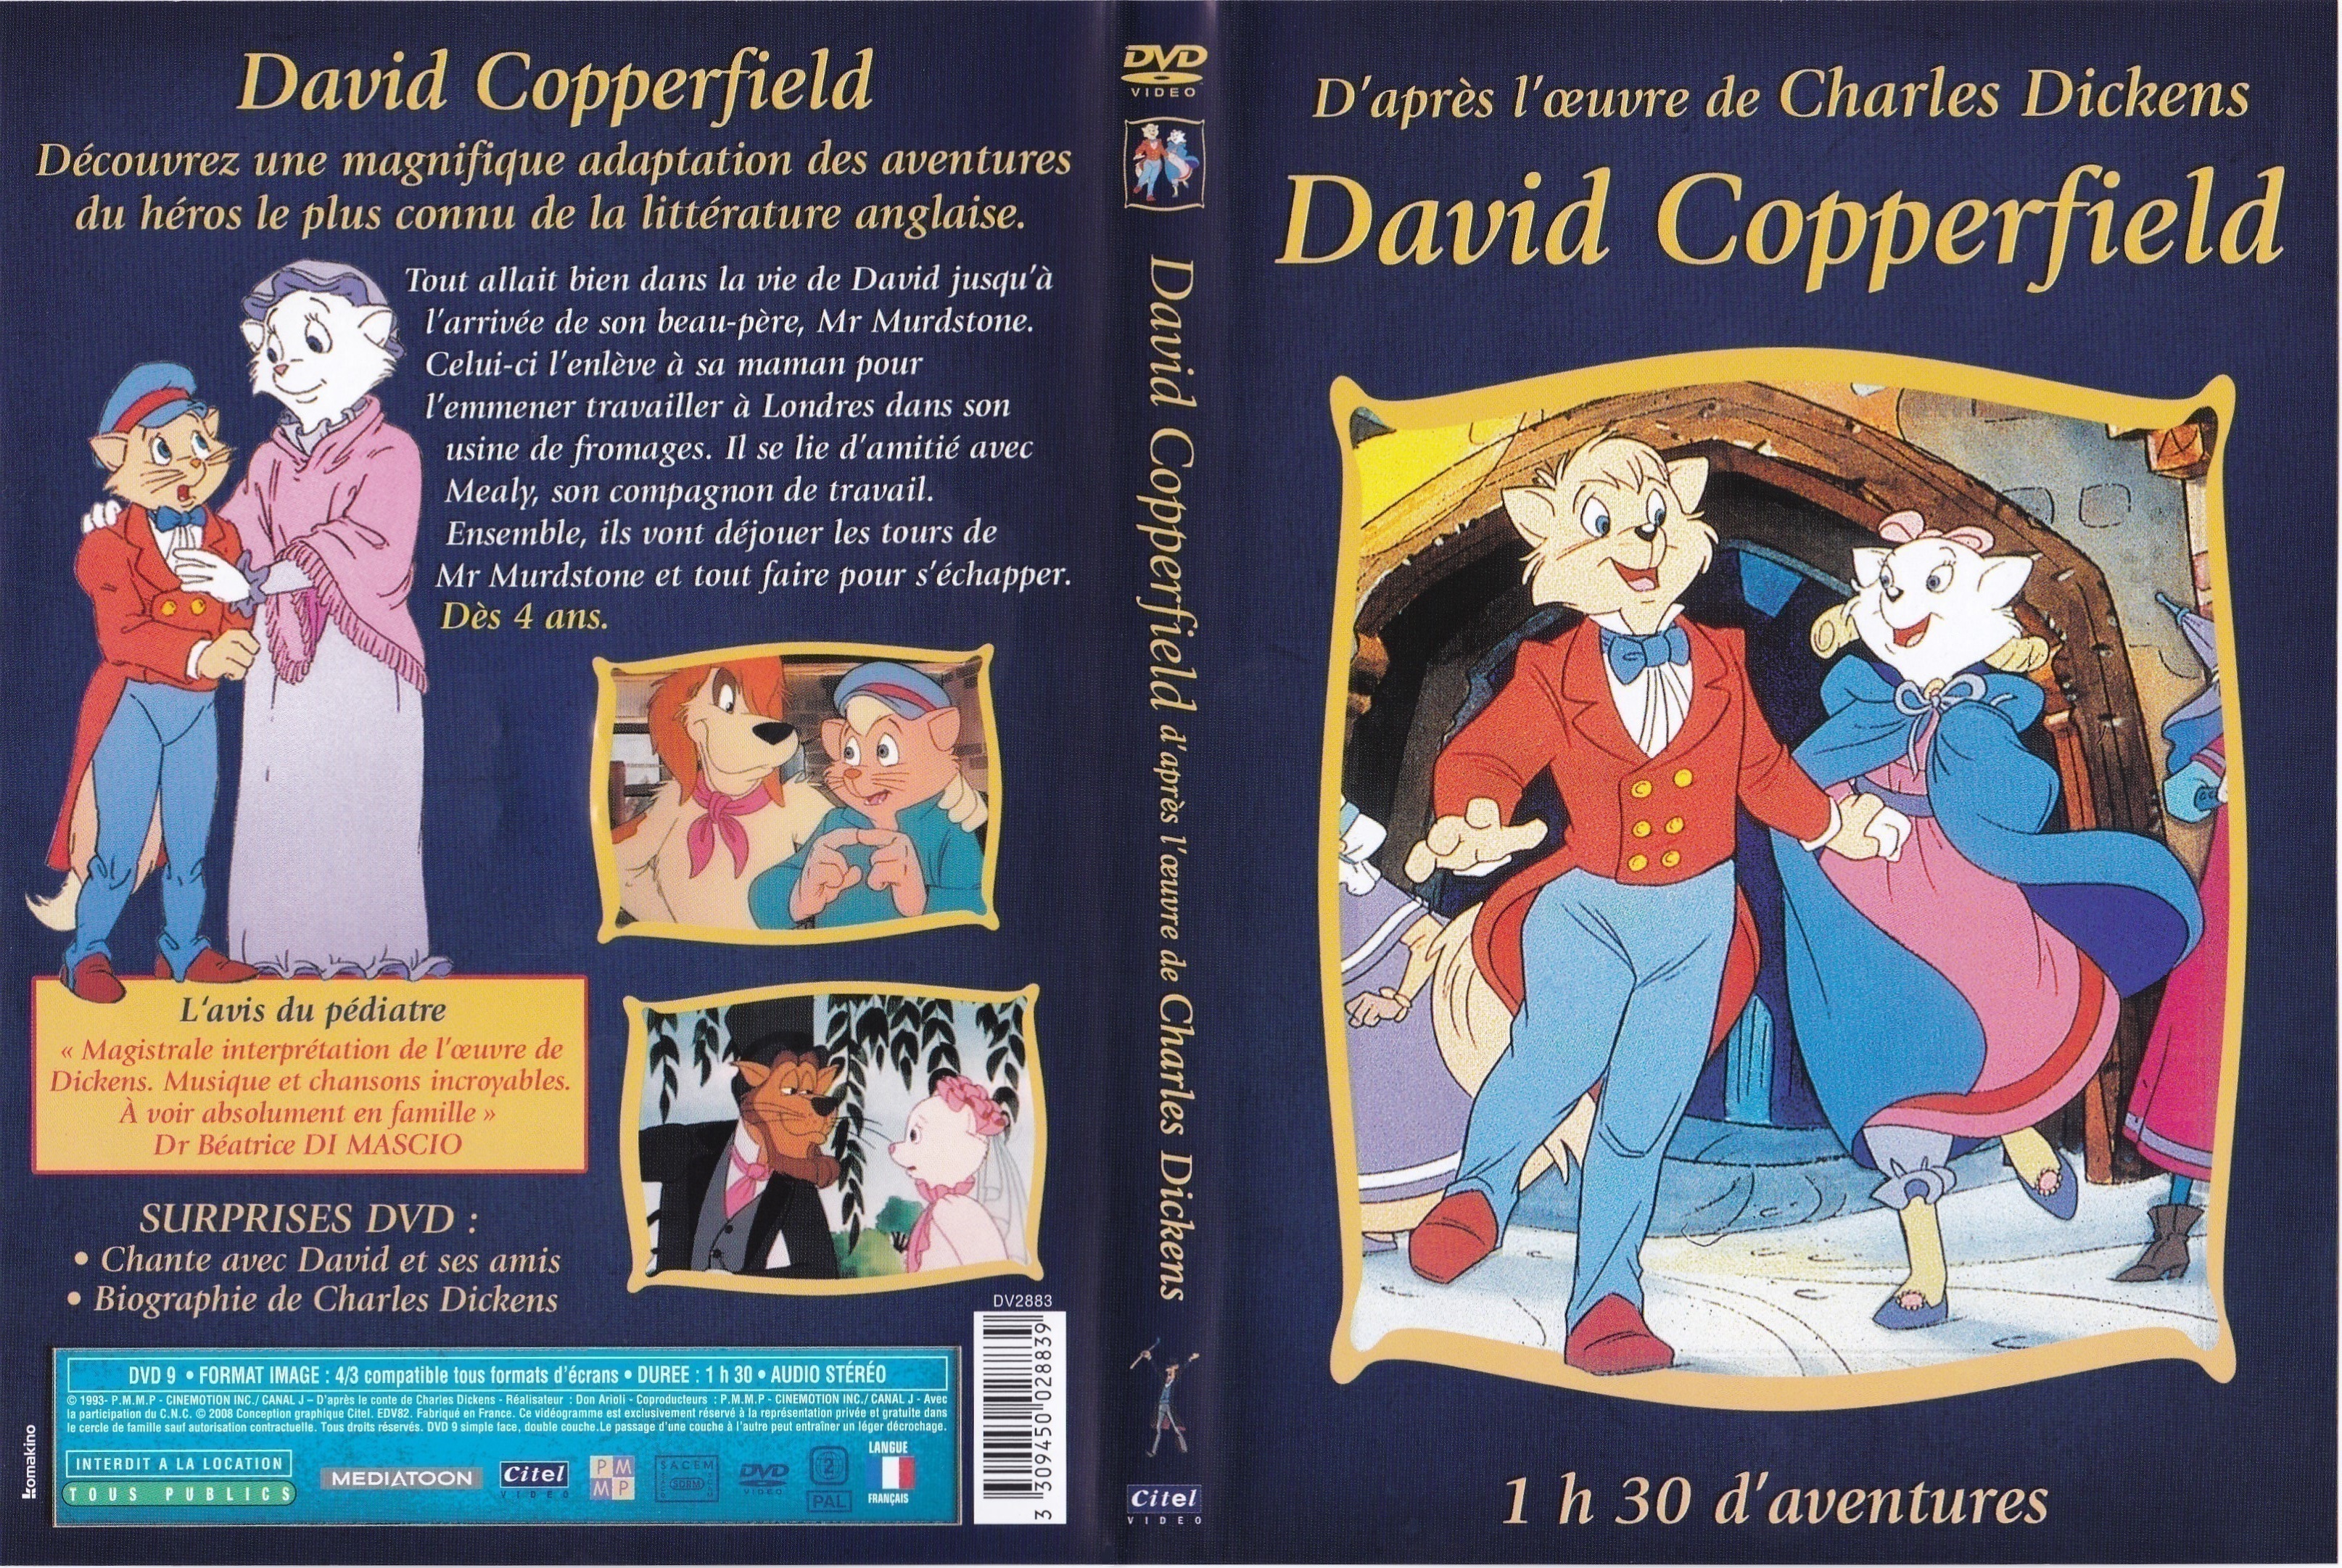 Jaquette DVD David Copperfield 1993 (DA)